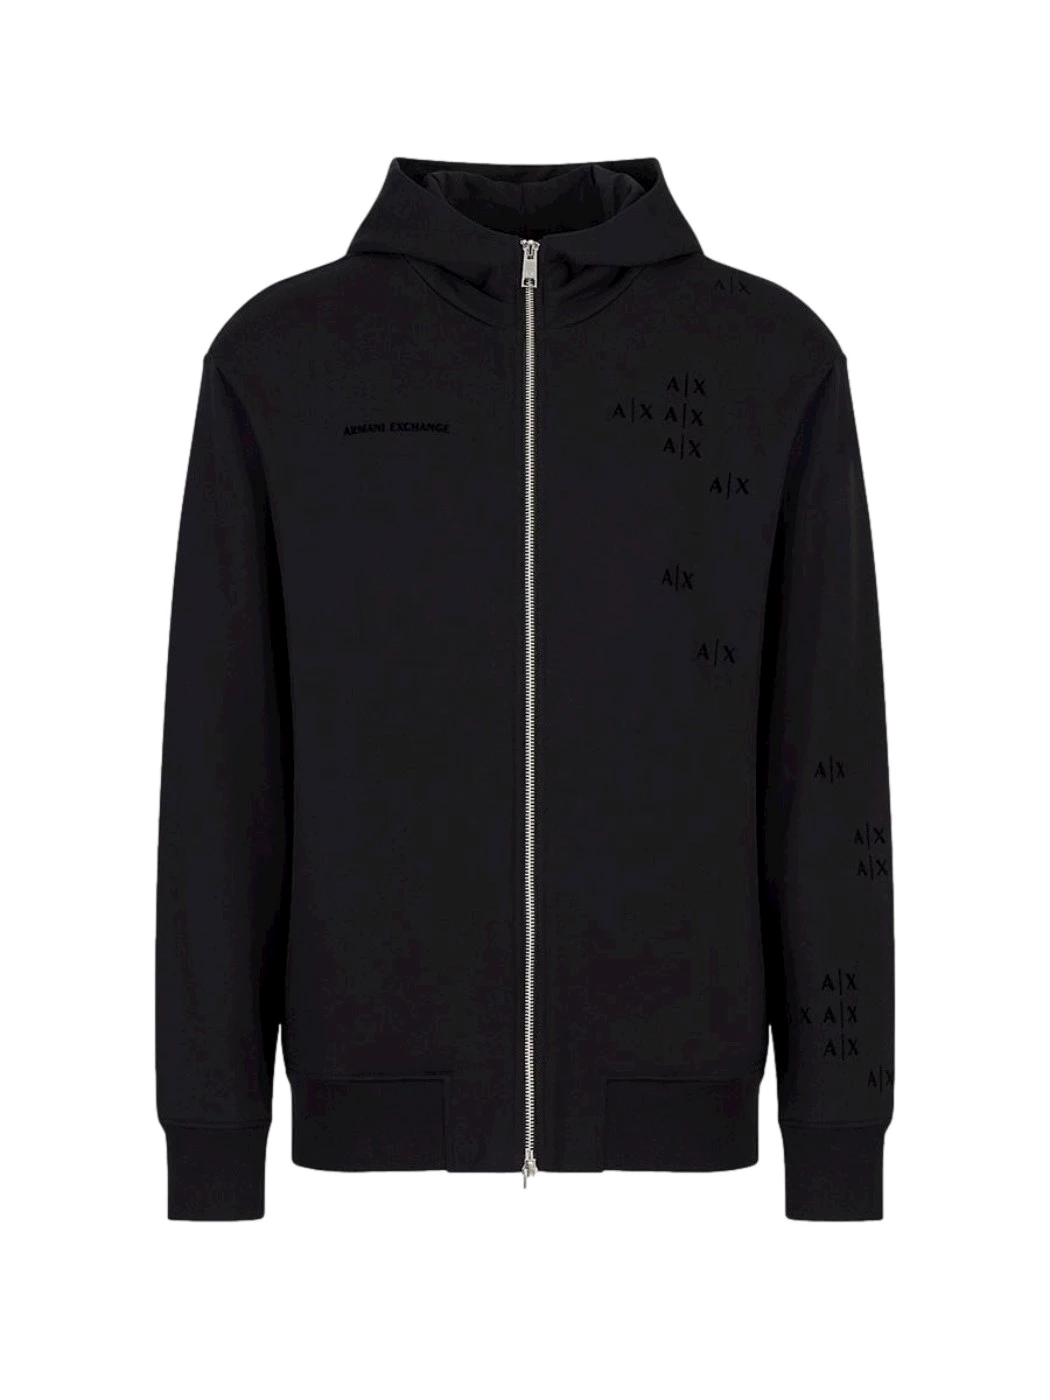 Armani Exchange hoodie